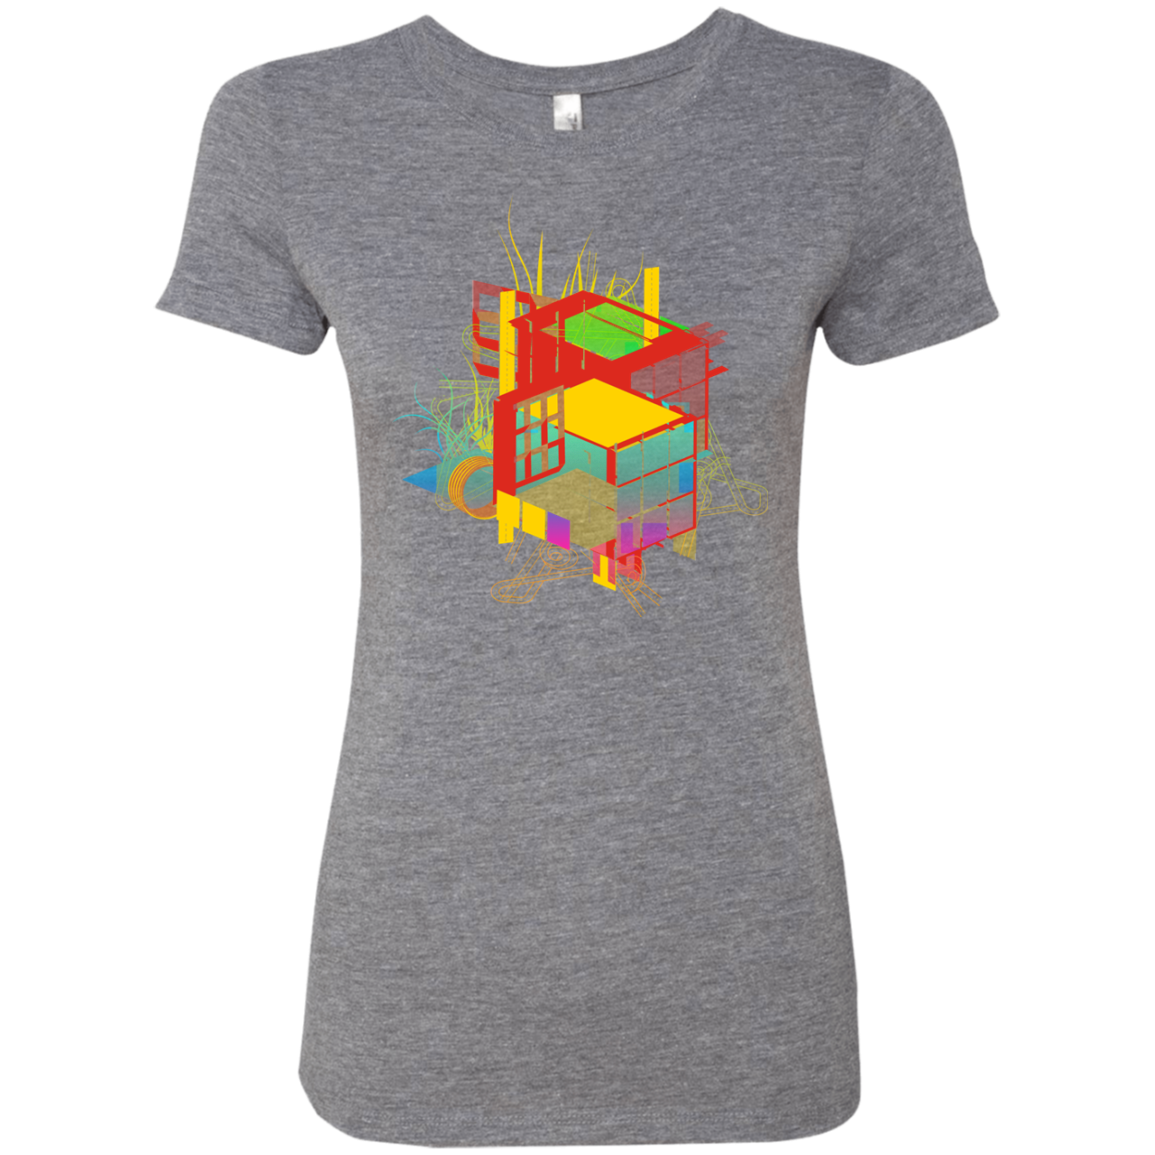 Rubik's Building Women's Triblend T-Shirt